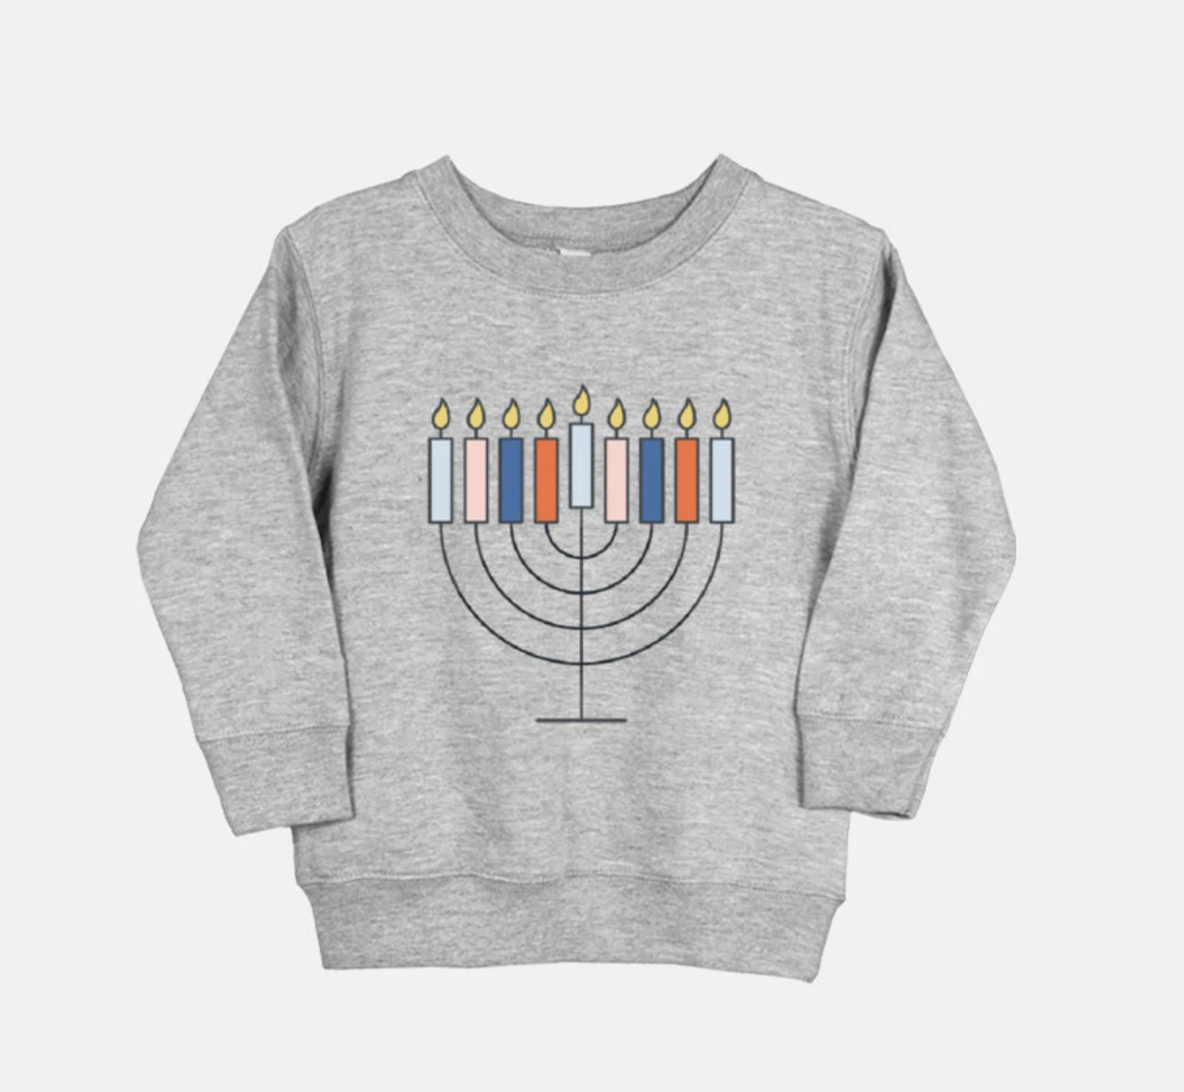 a grey sweatshirt with a menorah on it